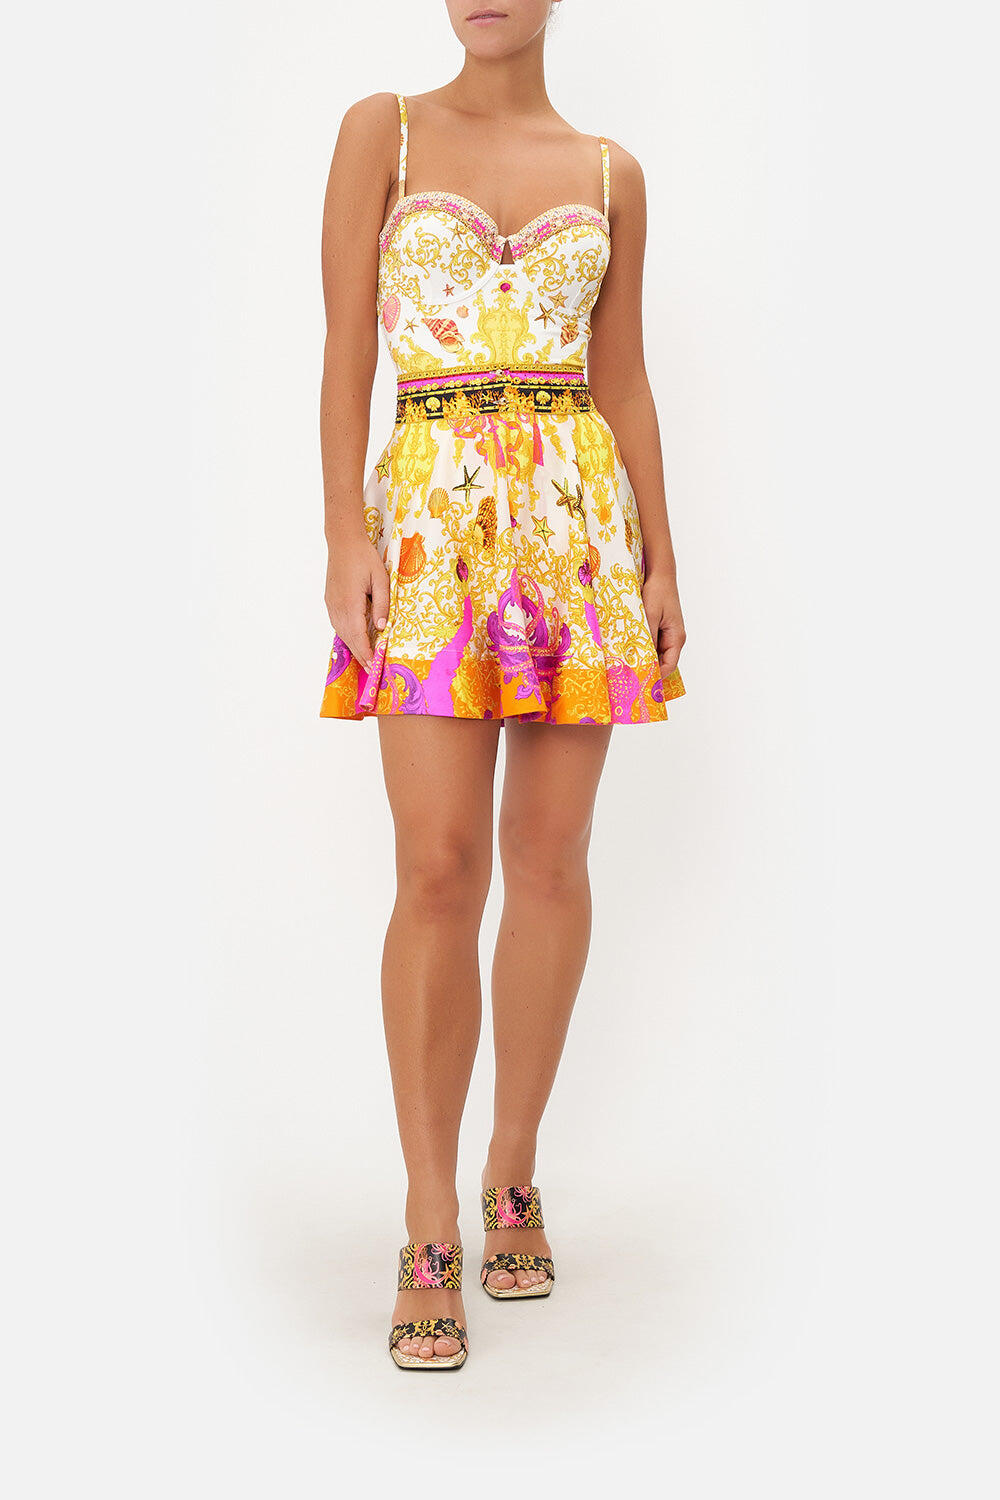 Designer Flounced Skirt with Octopus Print